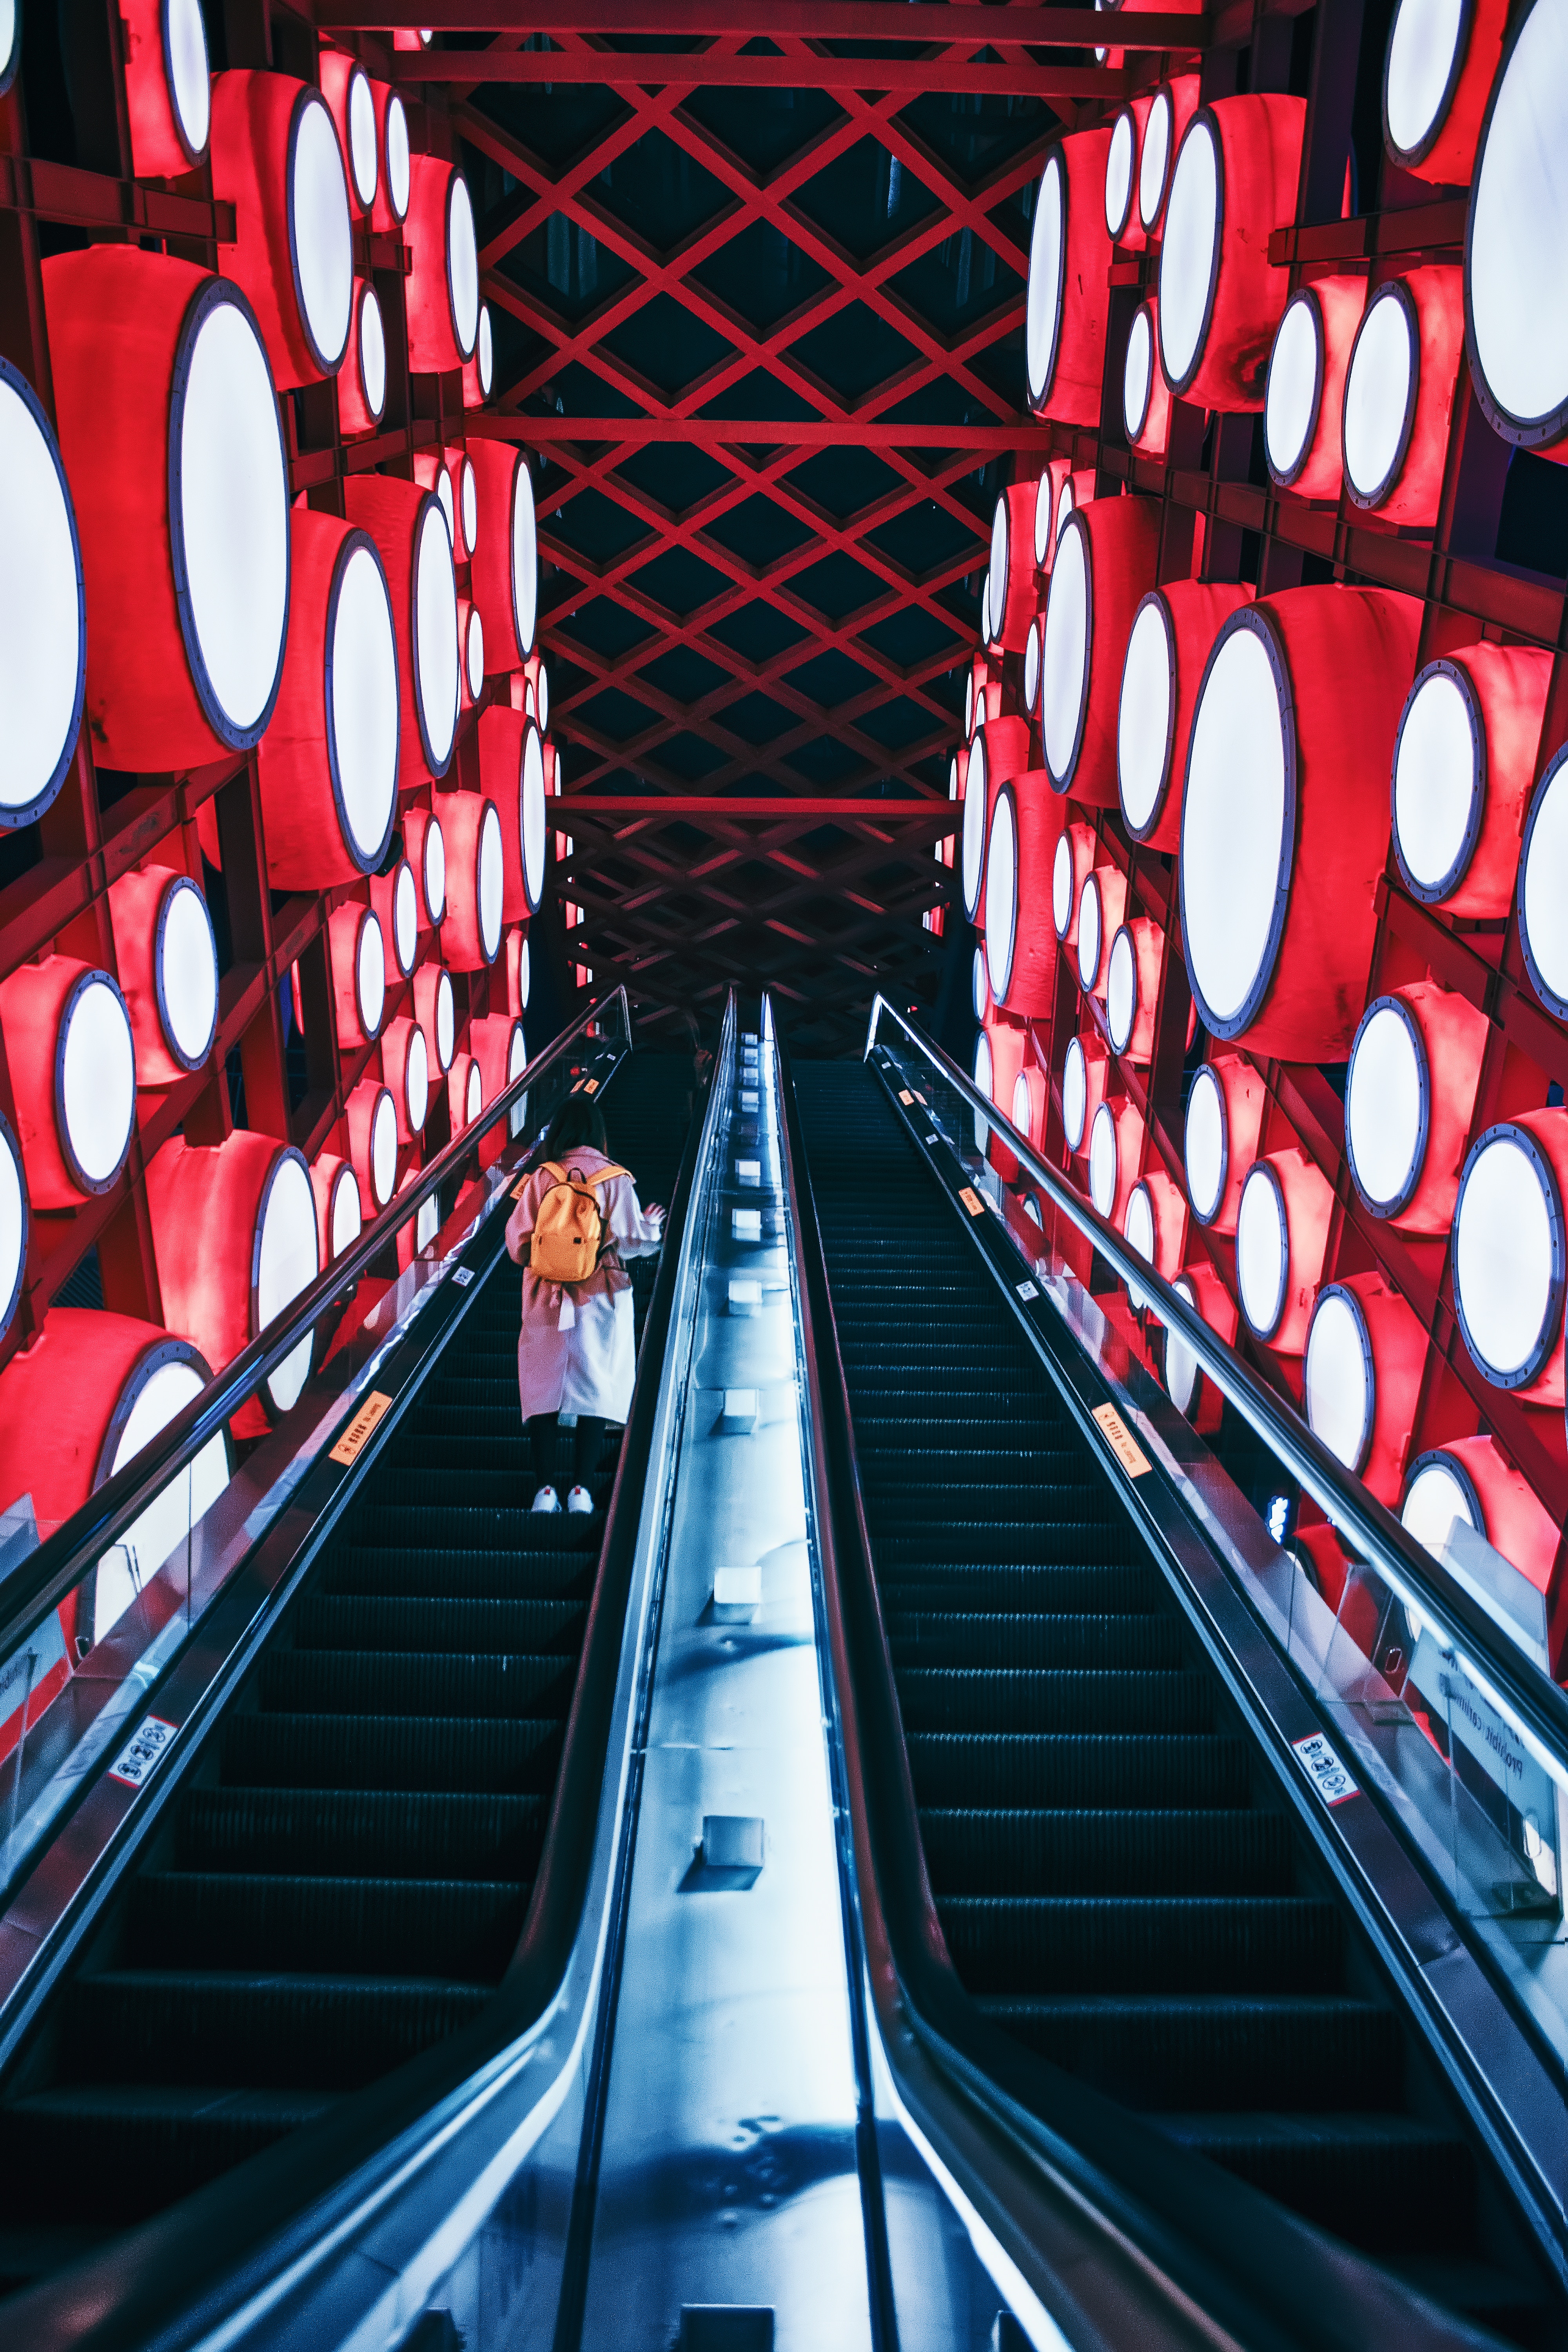 interior, red, lights, miscellanea, miscellaneous, lanterns, human, person, steps, escalator 1080p